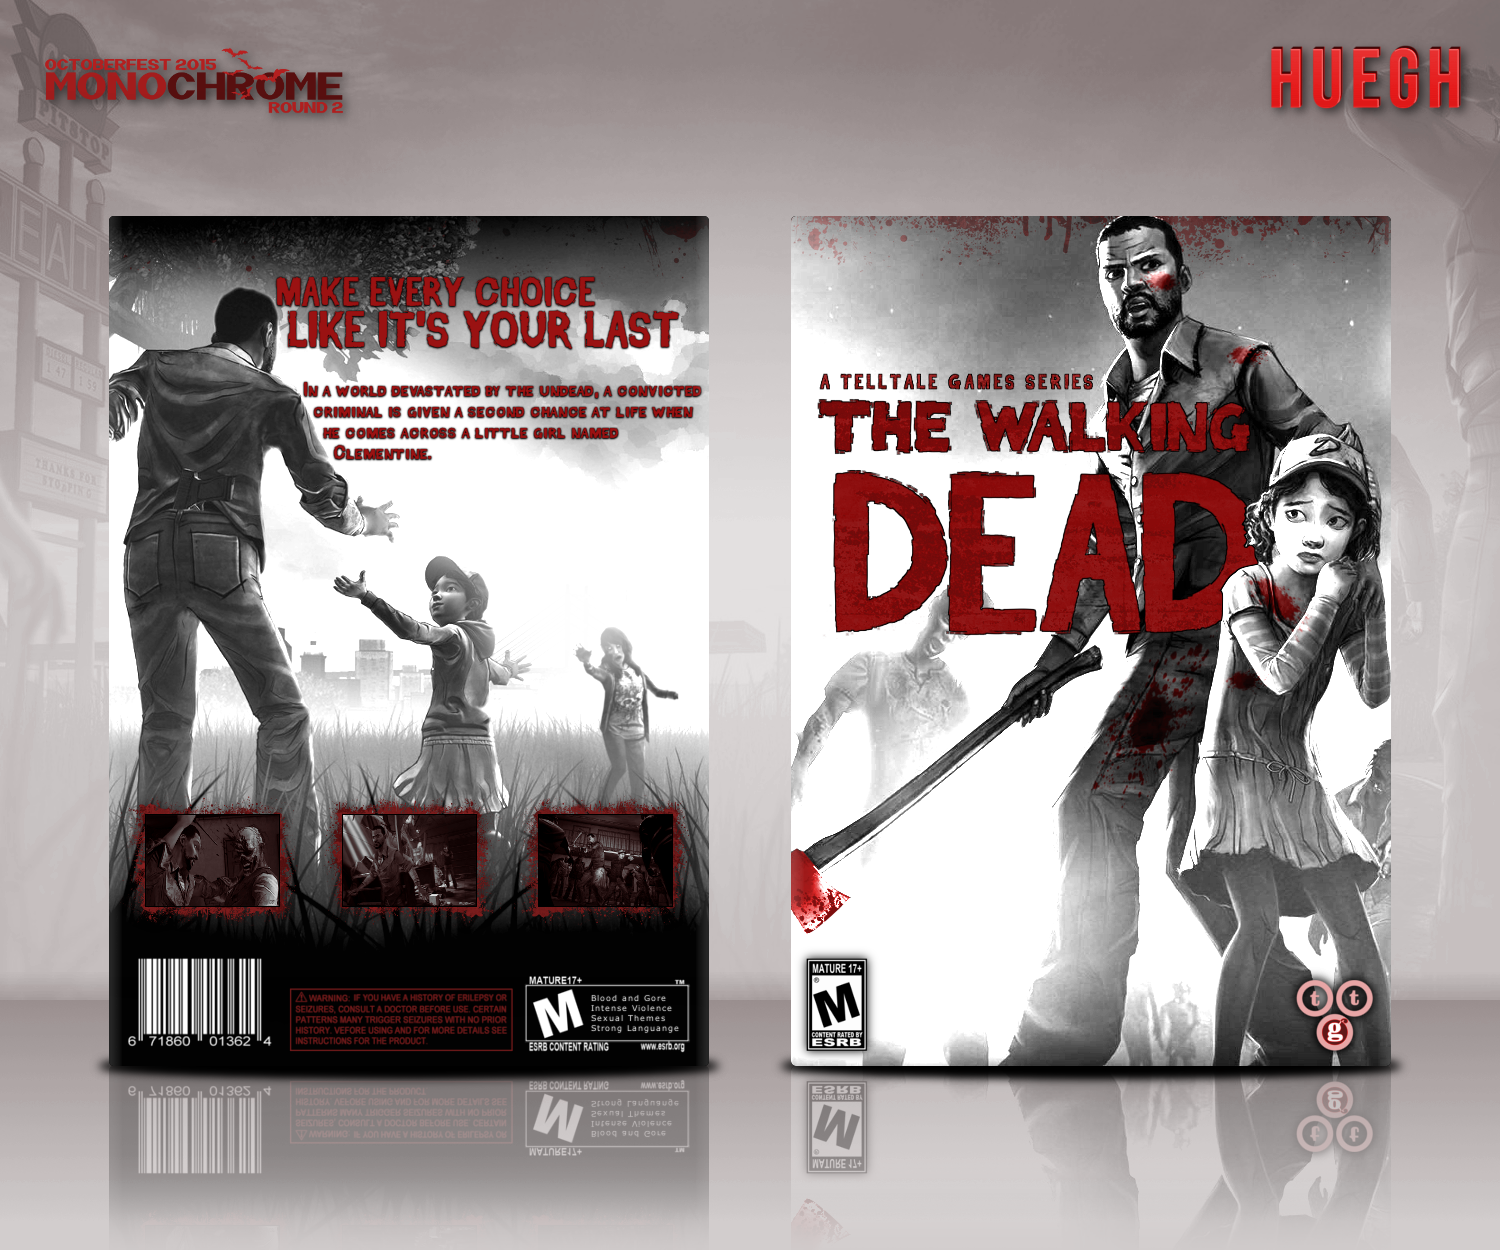 The Walking Dead - Season 1 box cover